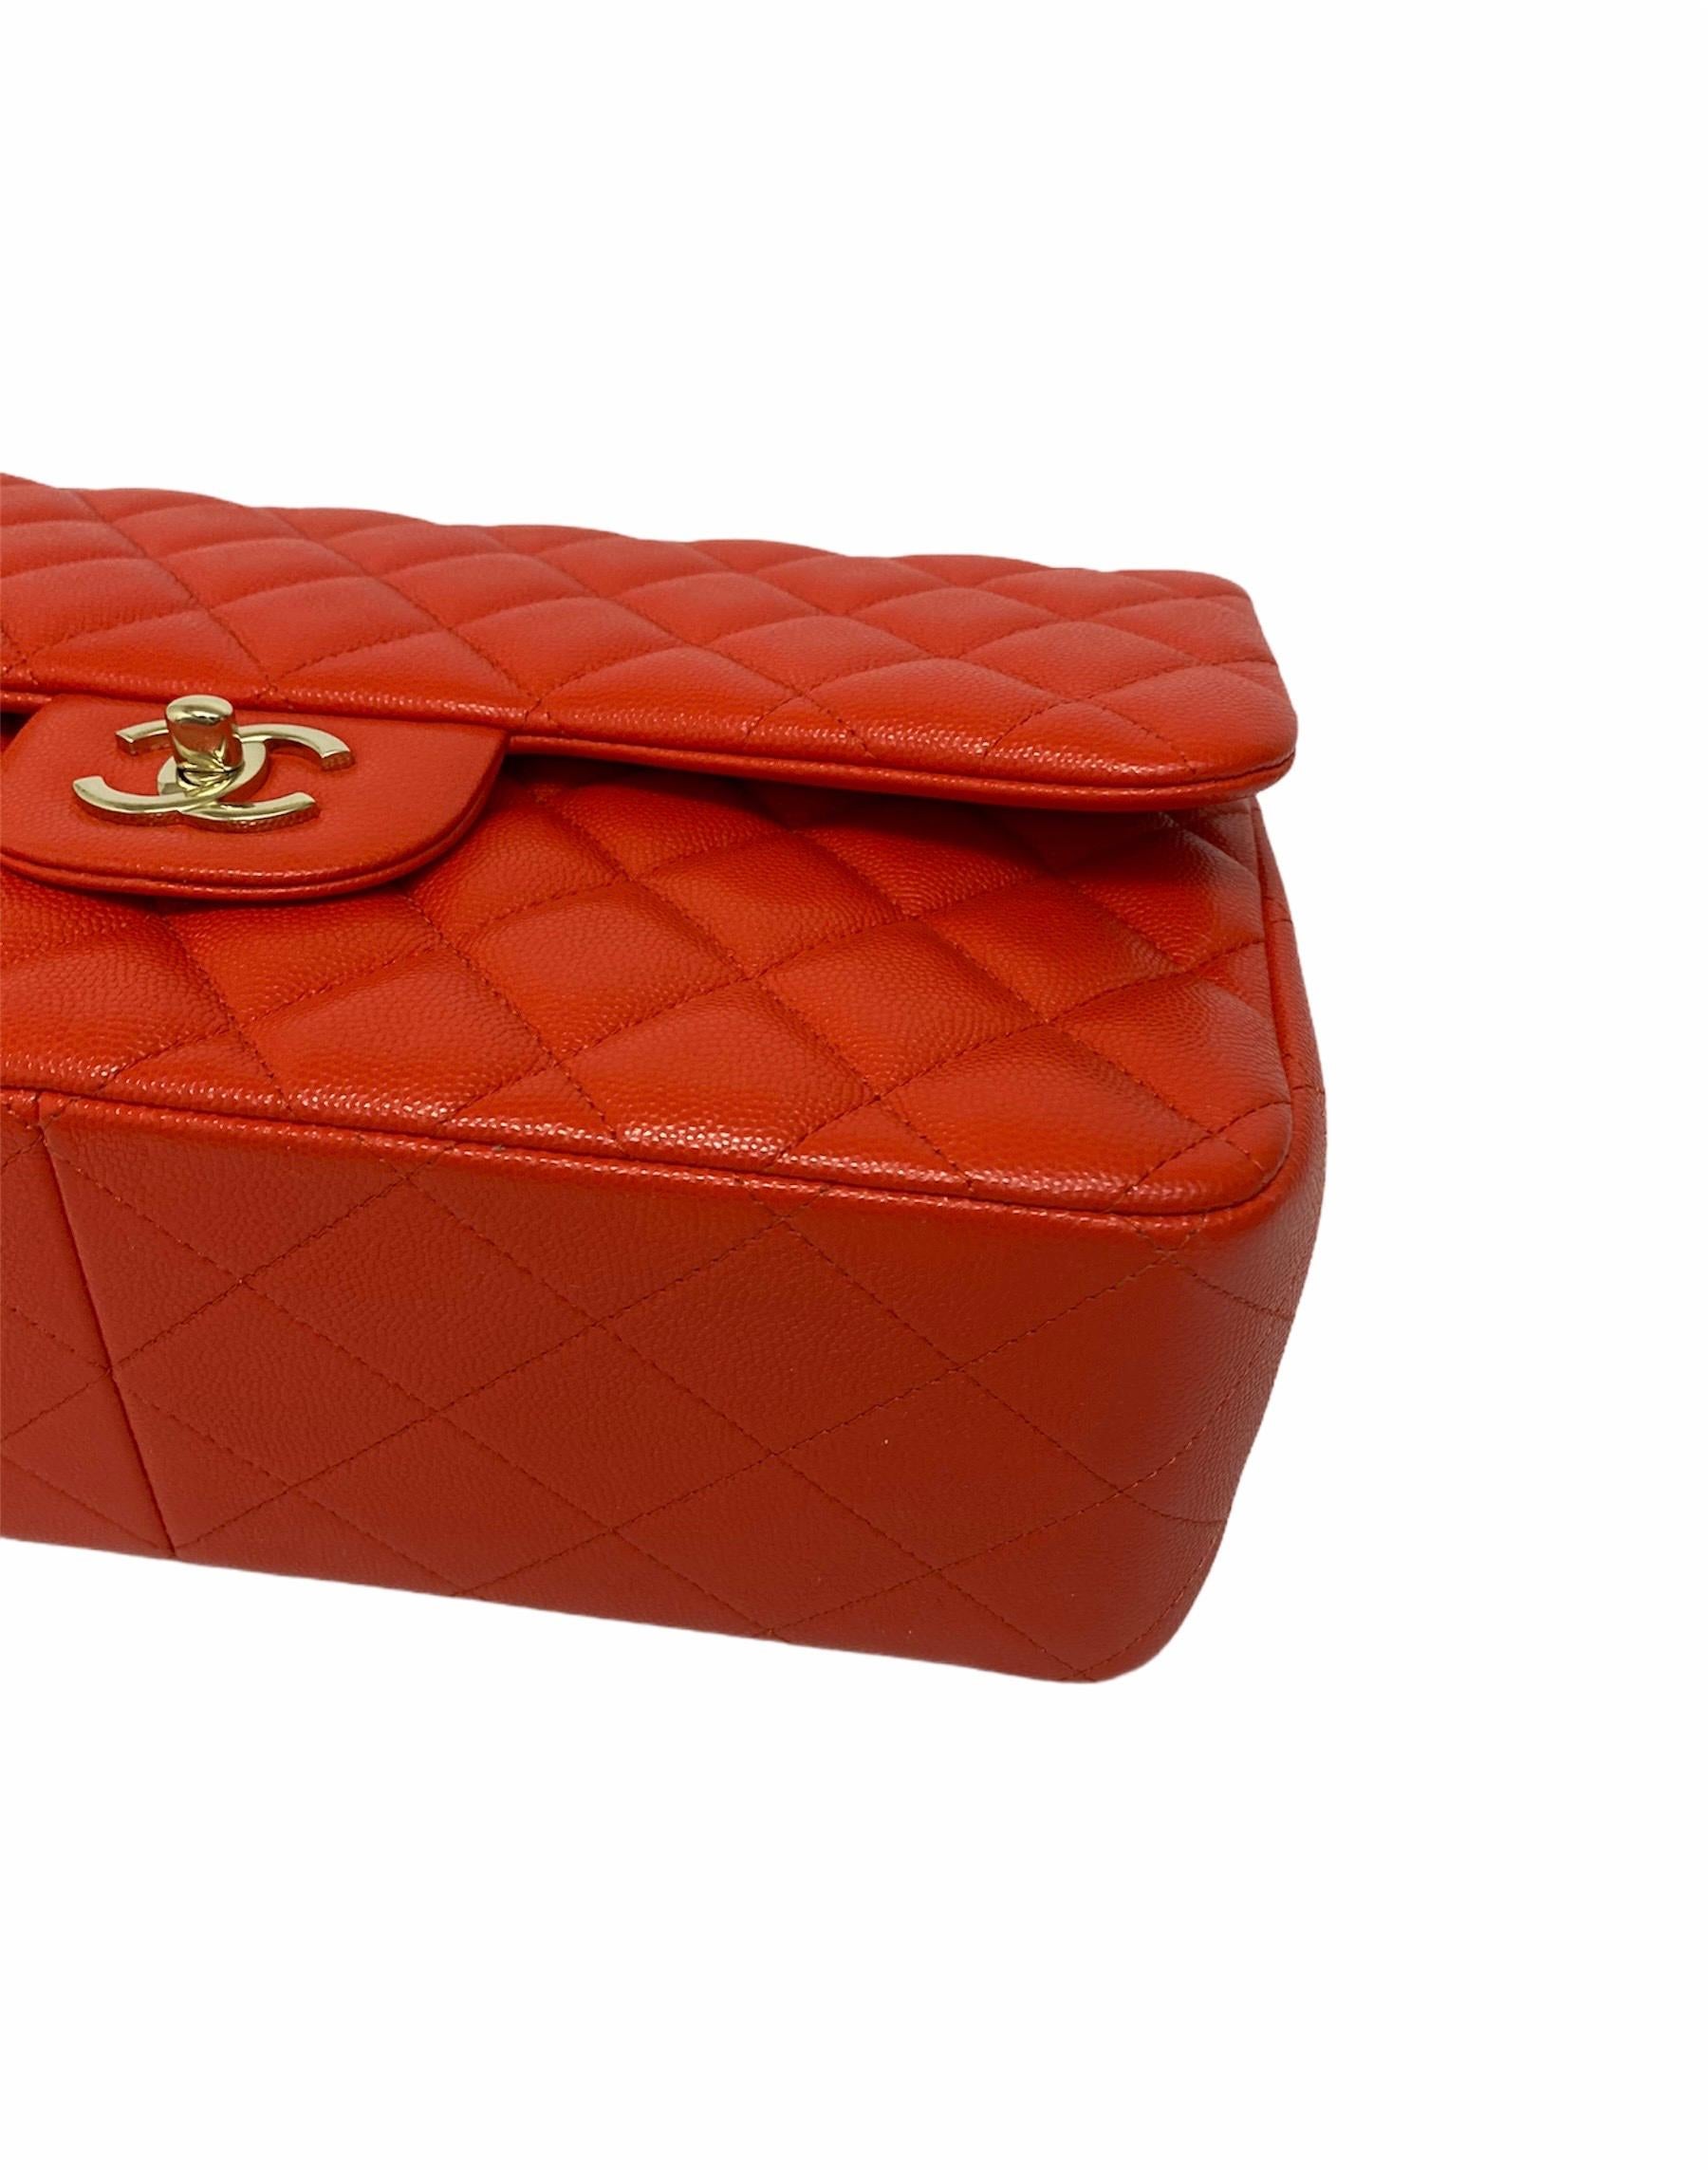 Women's 2019 Chanel Red Leather Maxi Jumbo Bag